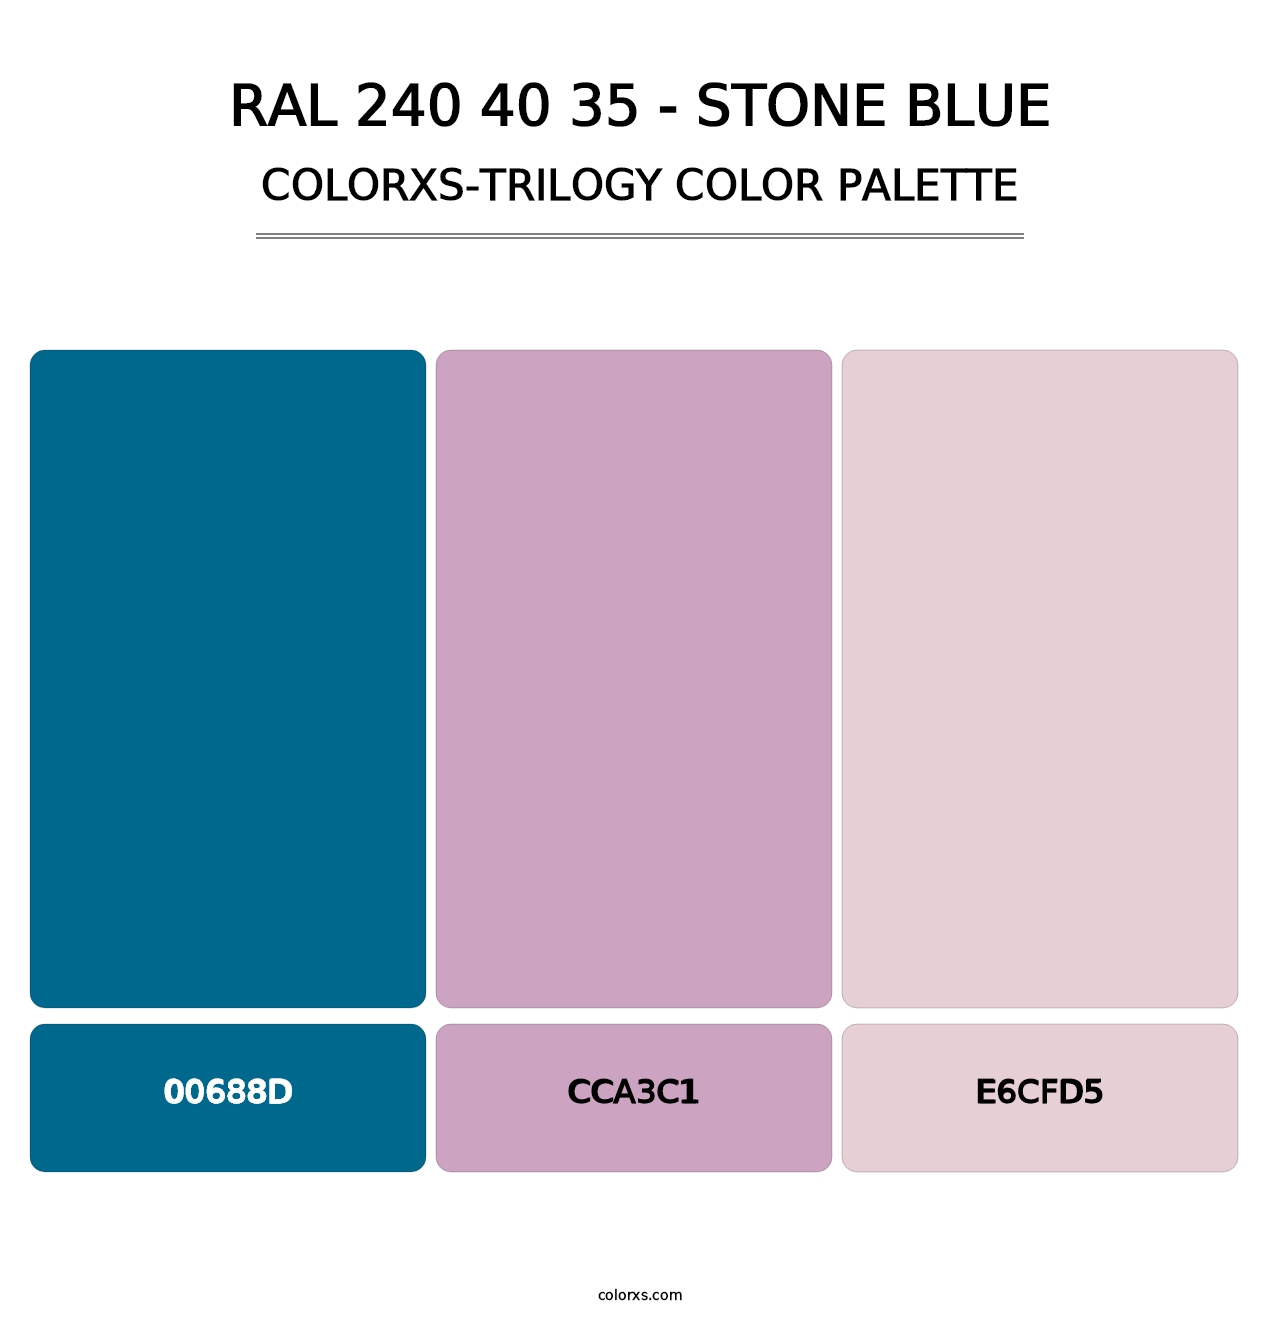 RAL 240 40 35 - Stone Blue - Colorxs Trilogy Palette